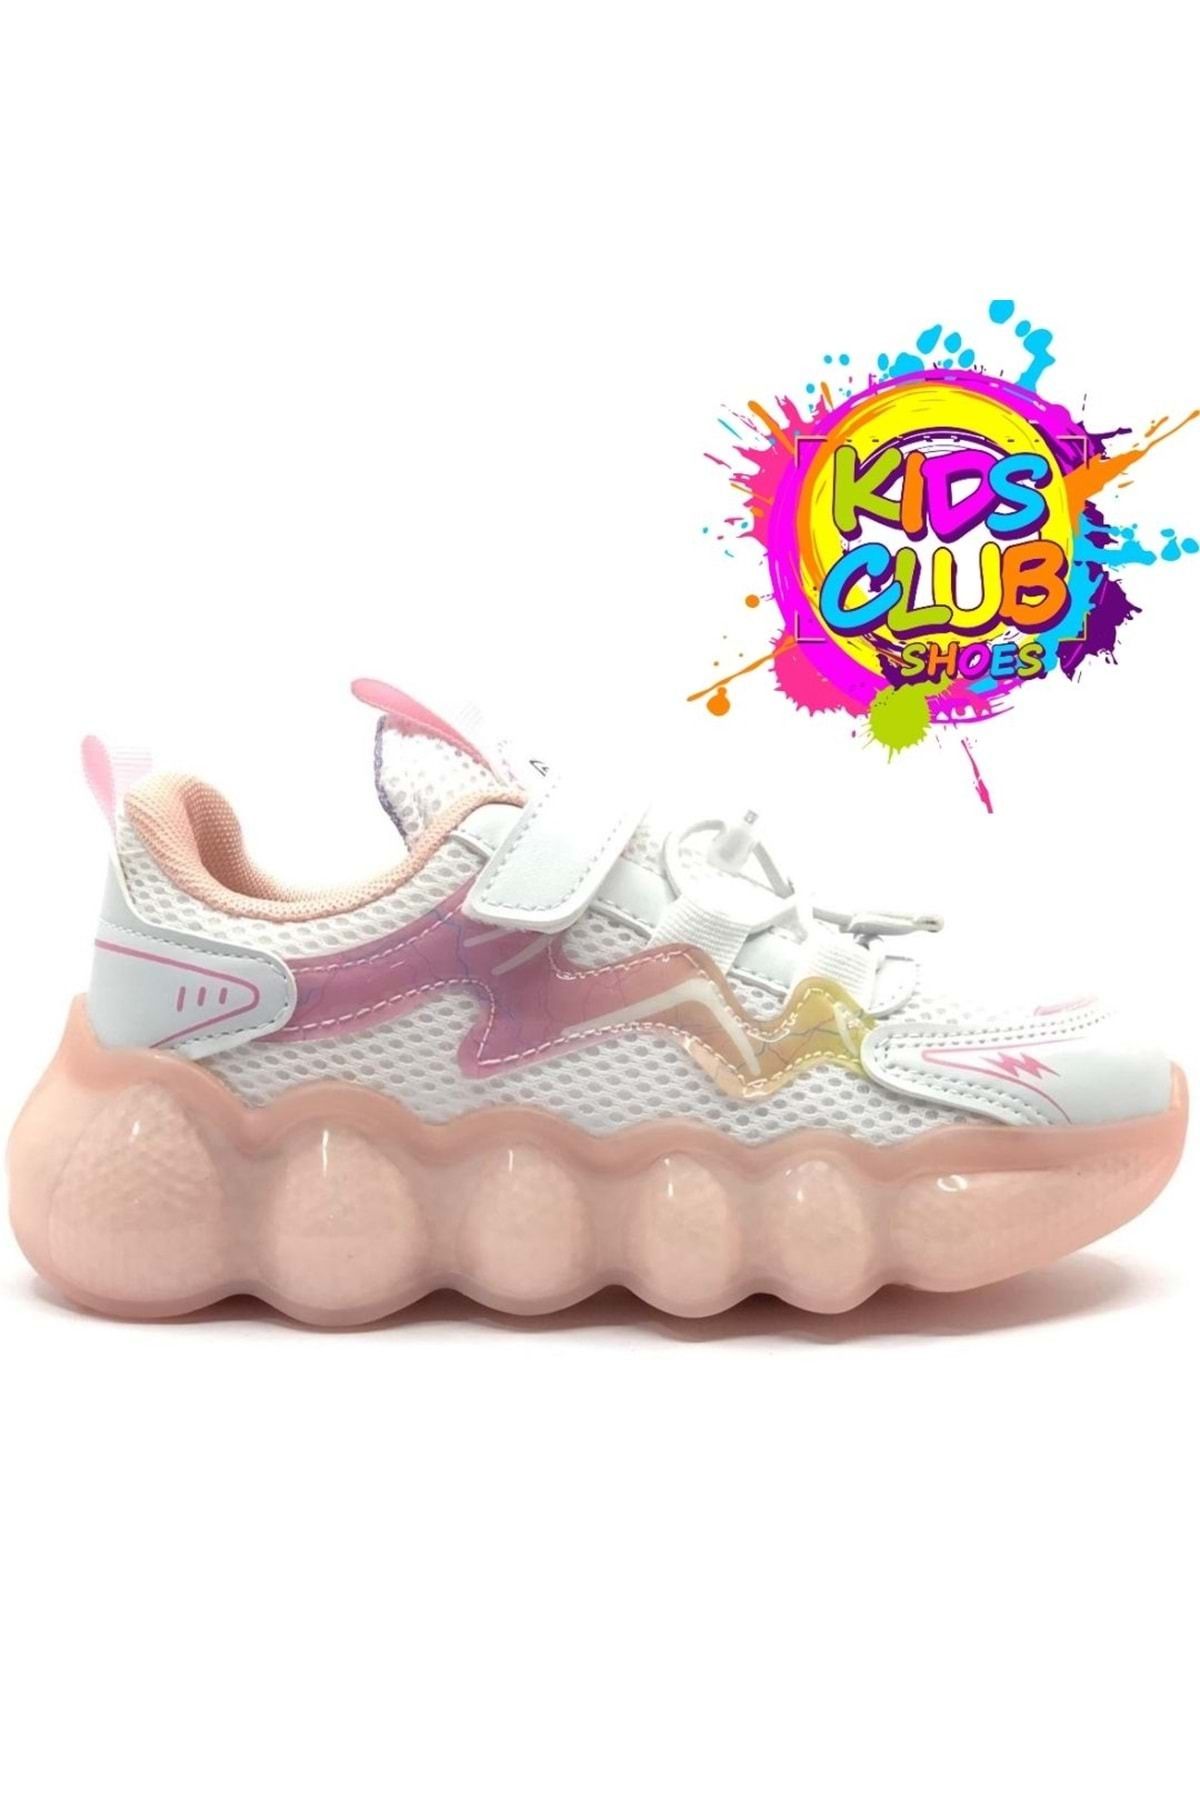 Kids Club Shoes Cool Drew Ortopedik Çocuk Spor Ayakkabı PEMBE